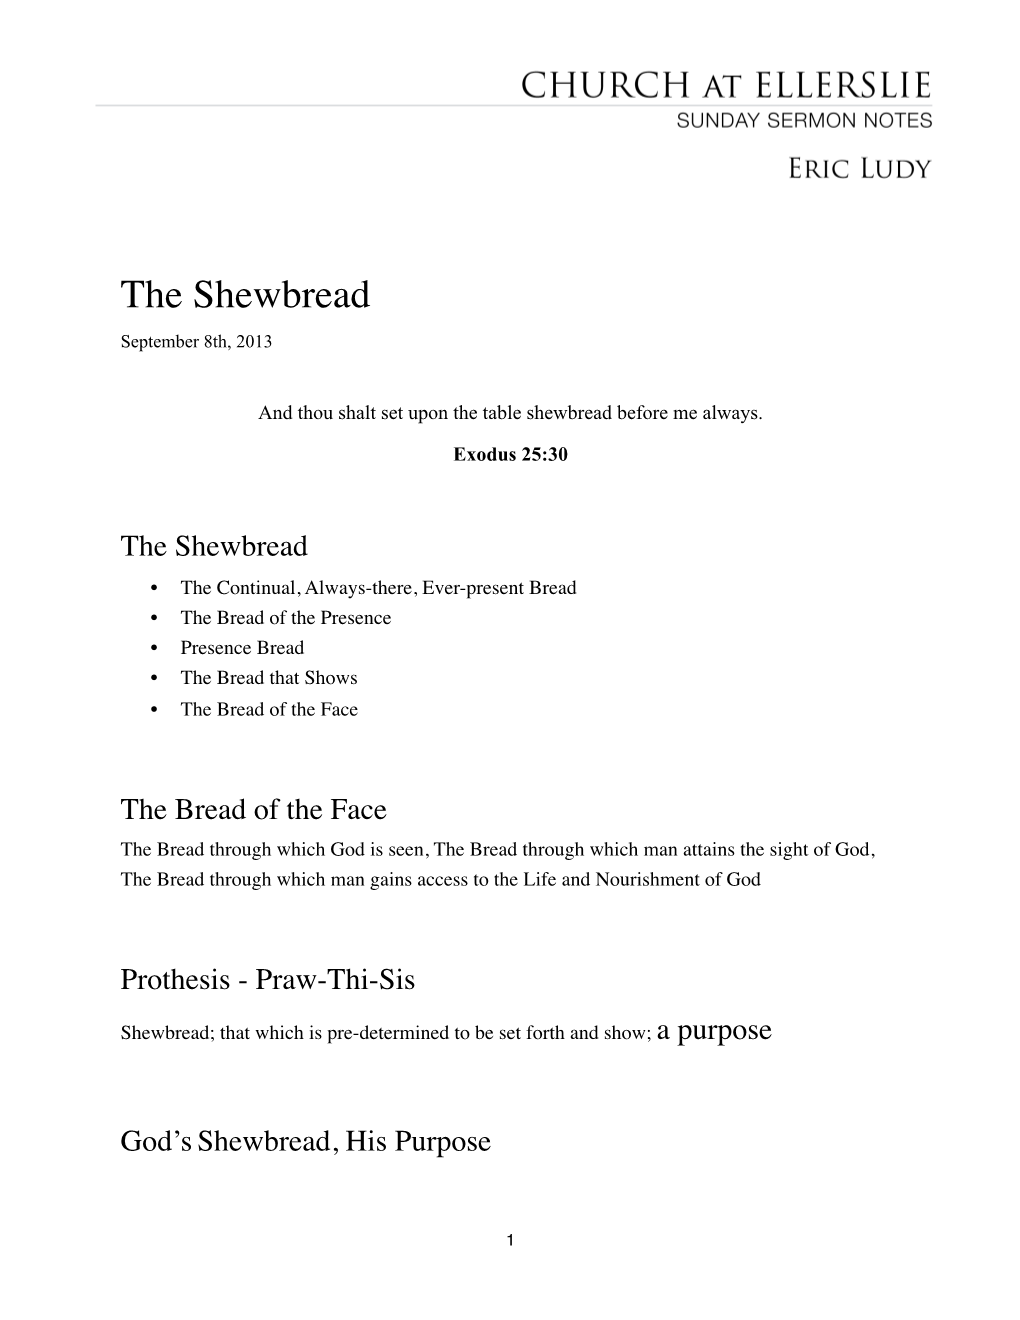 The Shewbread 9-8-13